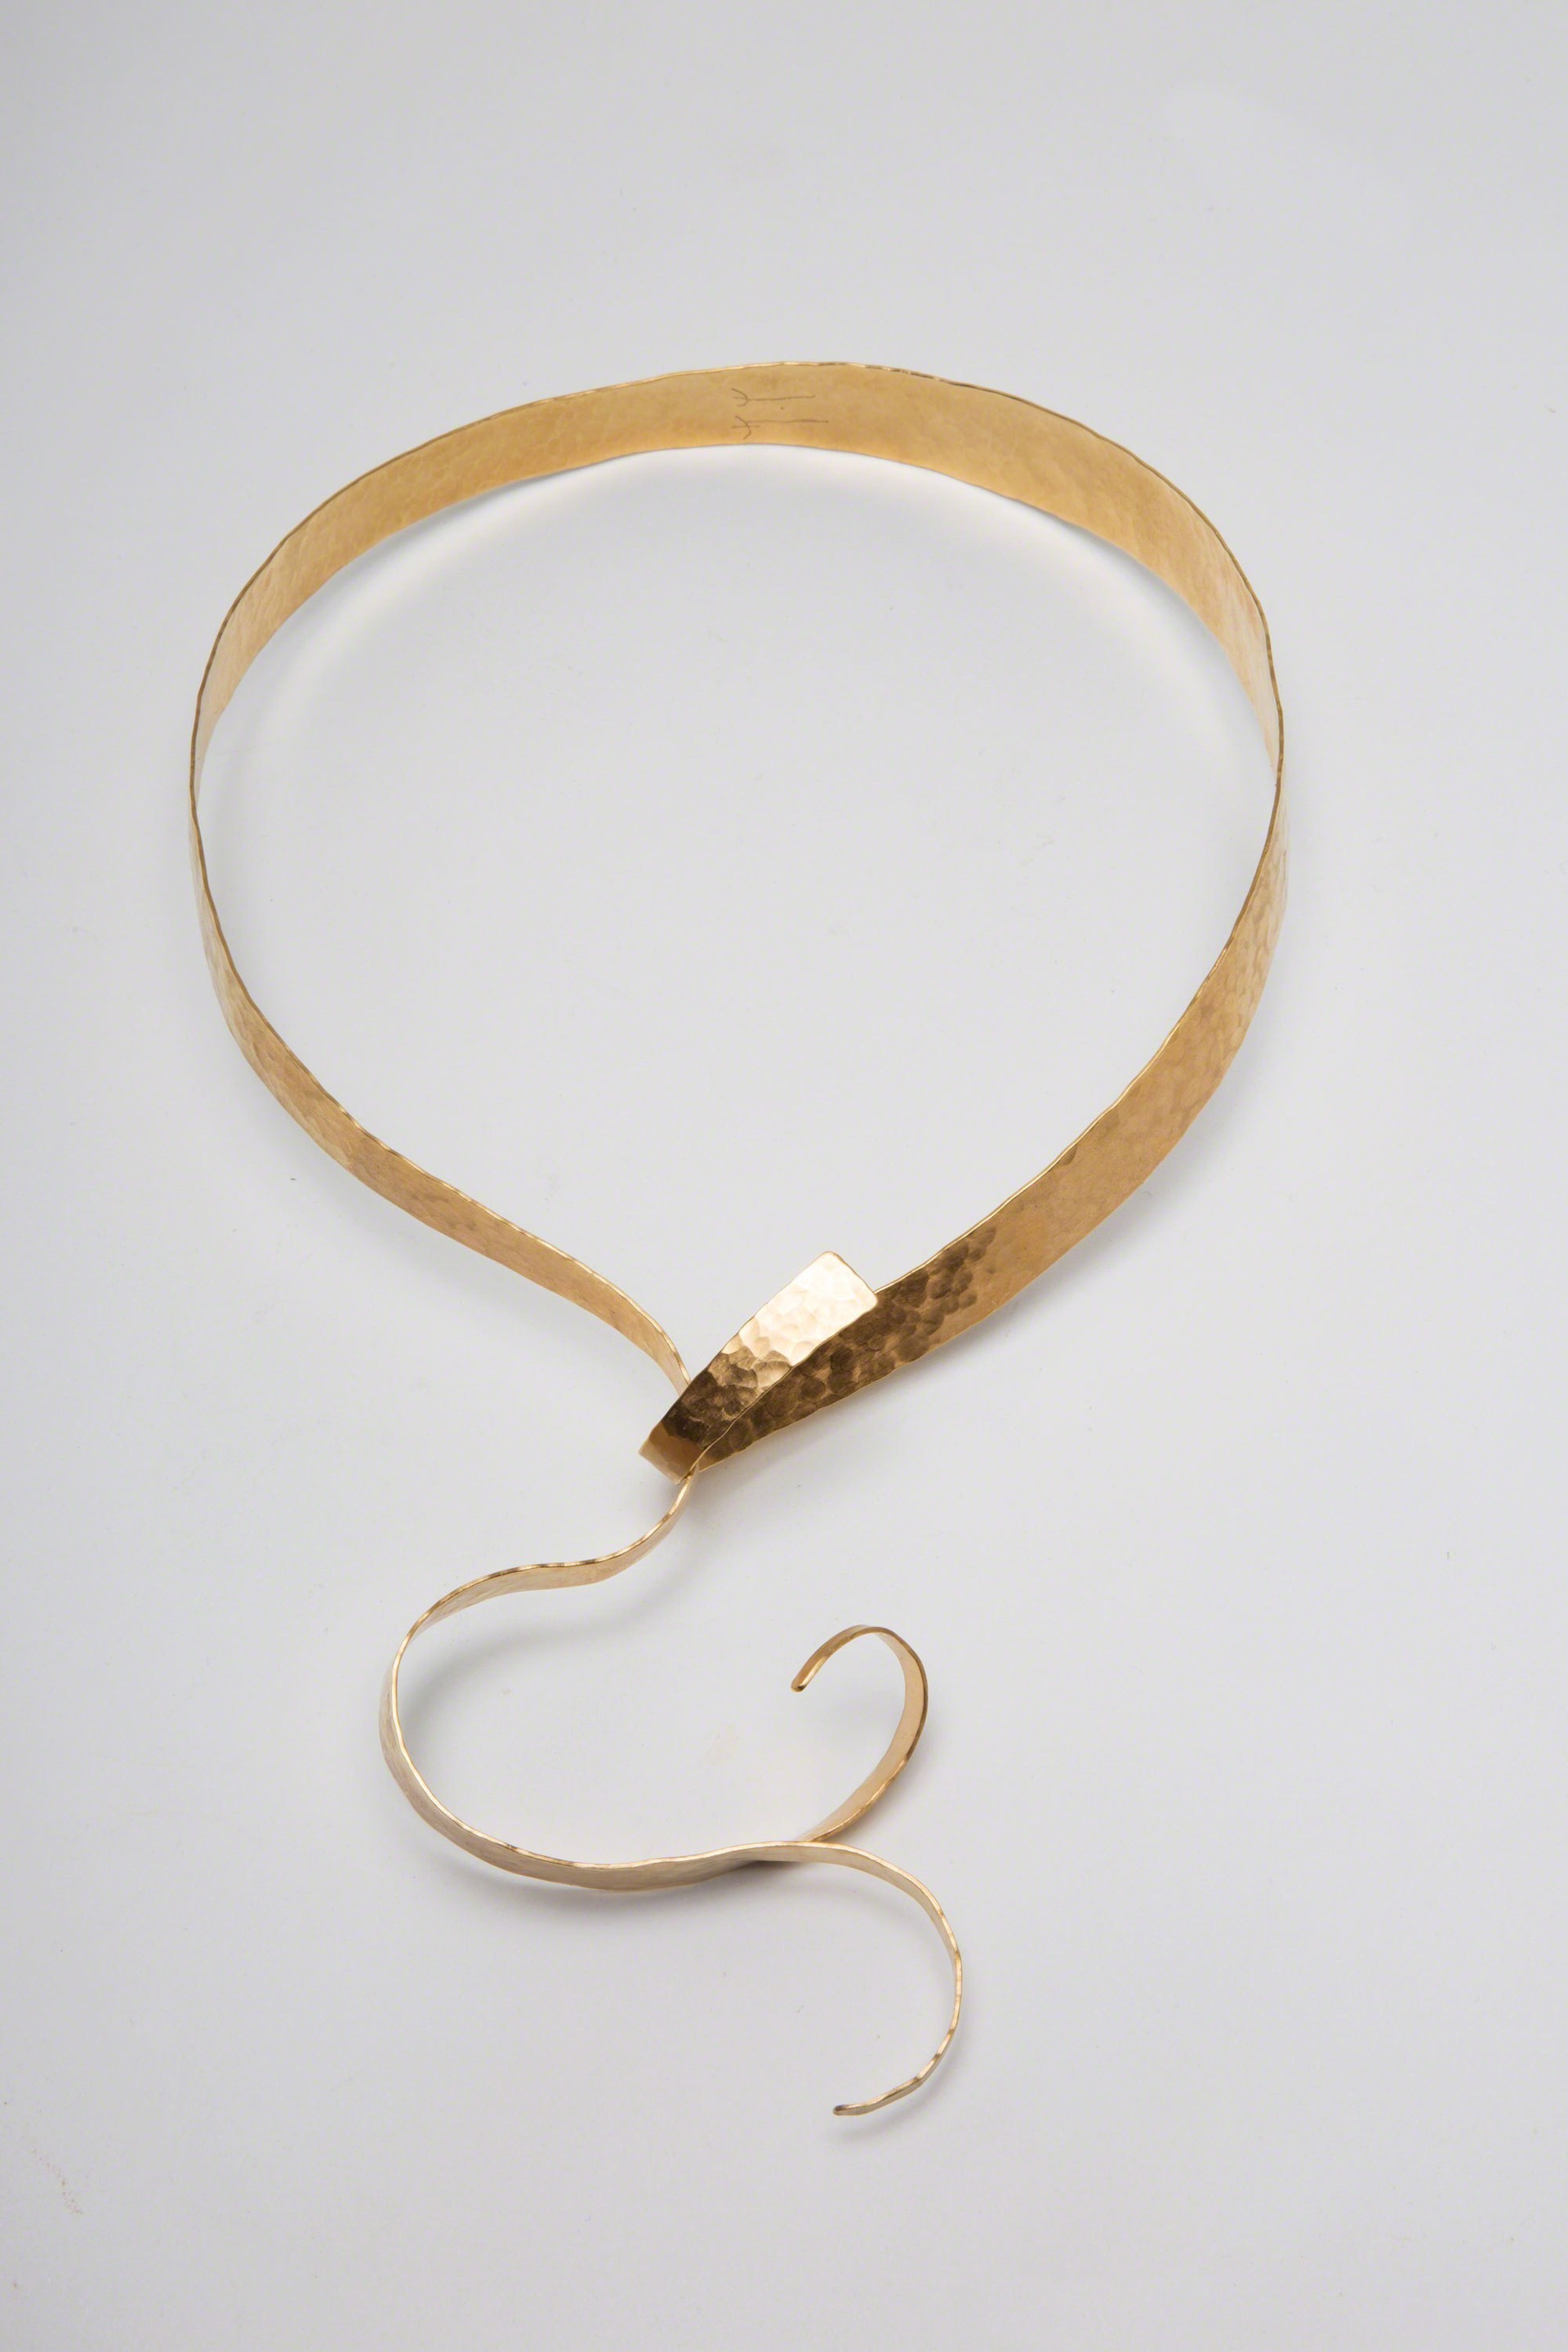 "Aura" Necklace by Jacques Jarrige